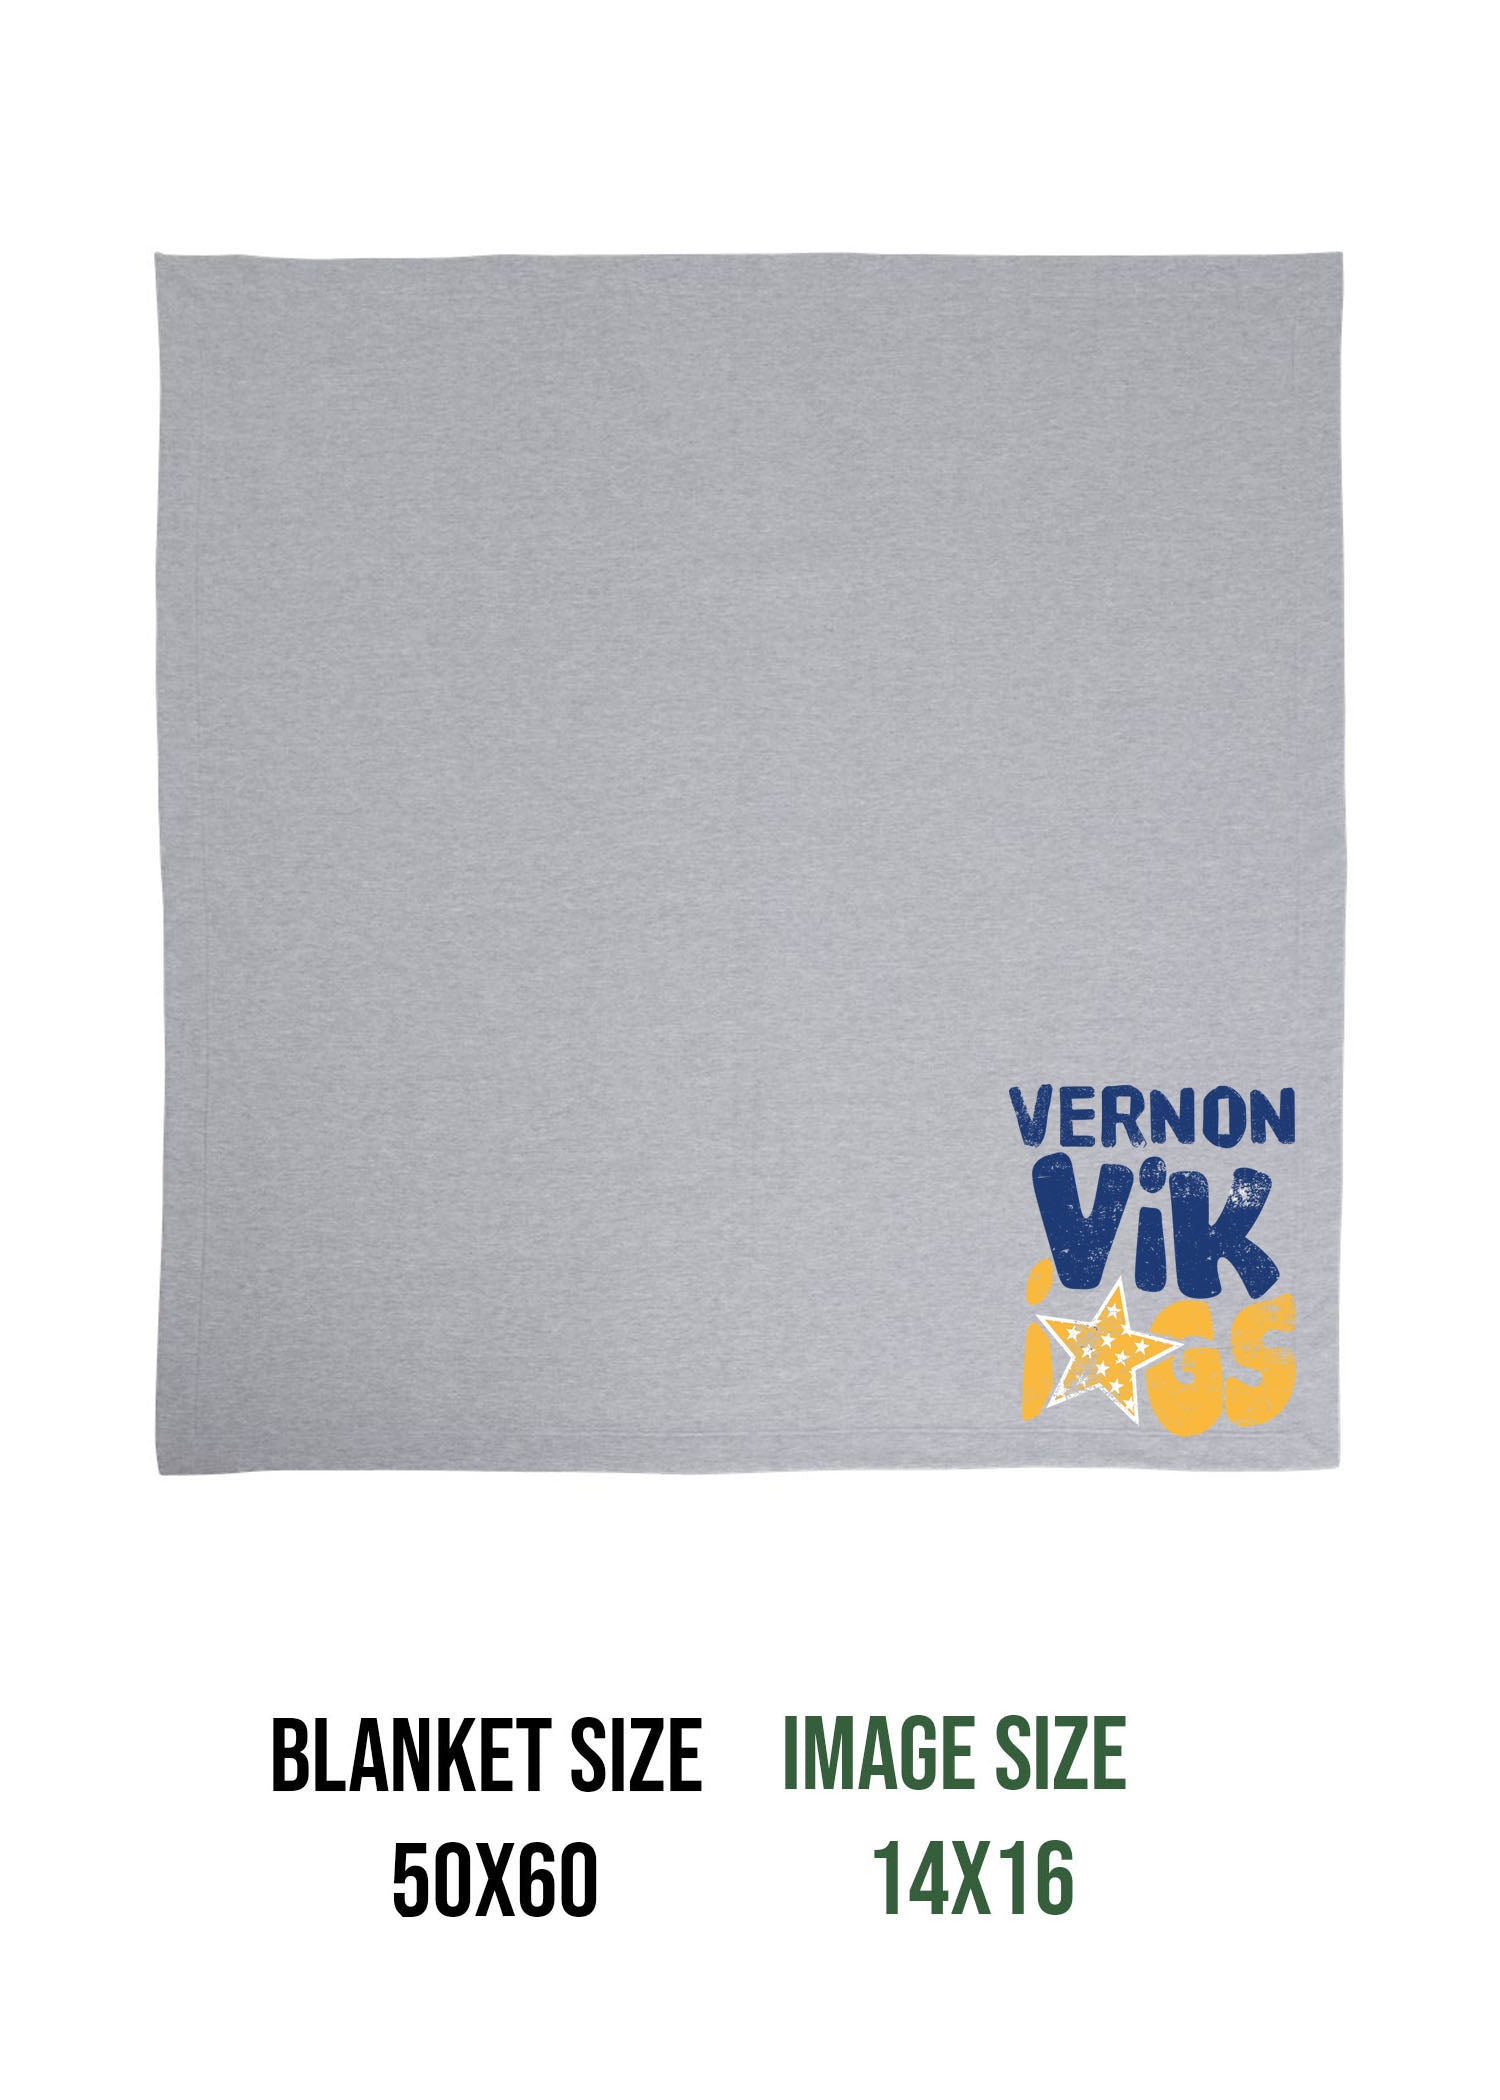 Vernon Design 14 Blanket